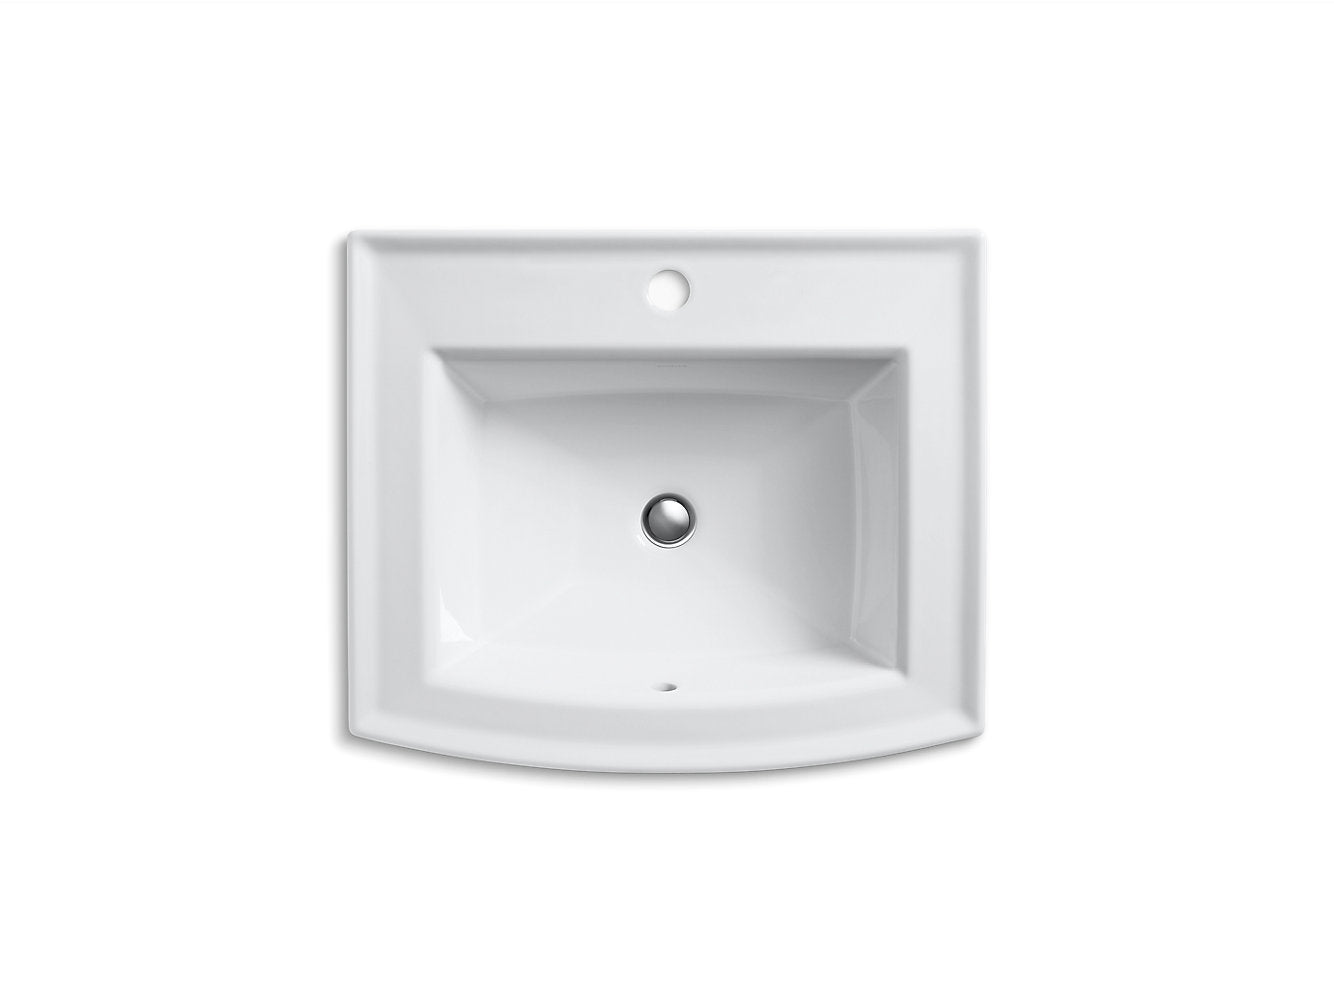 Kohler Archer 22-5/8" x 19-7/16" Drop-in Bathroom Sink With Single Faucet Hole